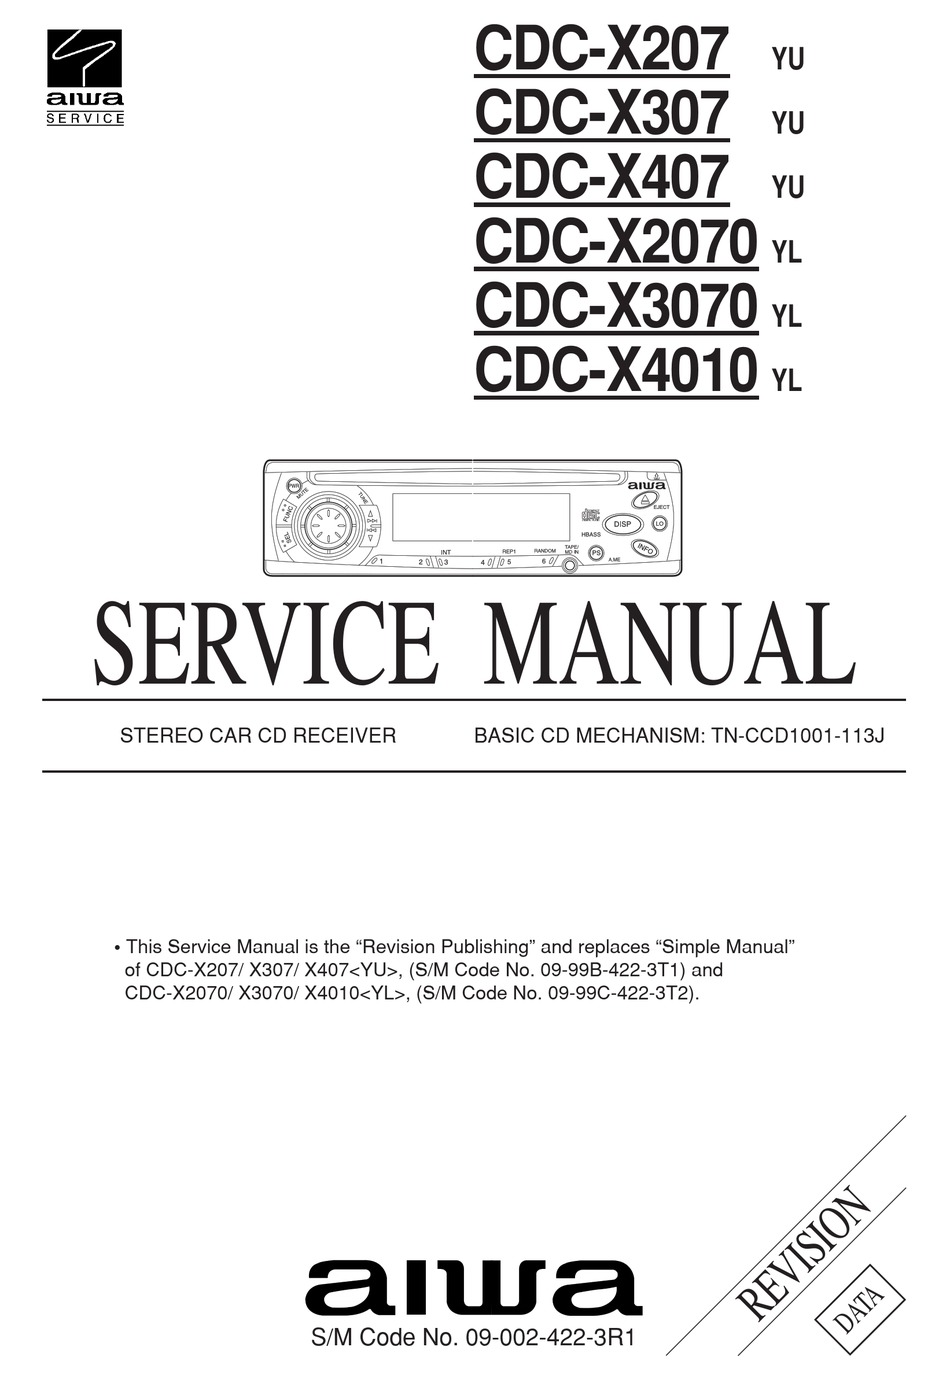 Aiwa Cdc X207 Service Manual Pdf Download Manualslib